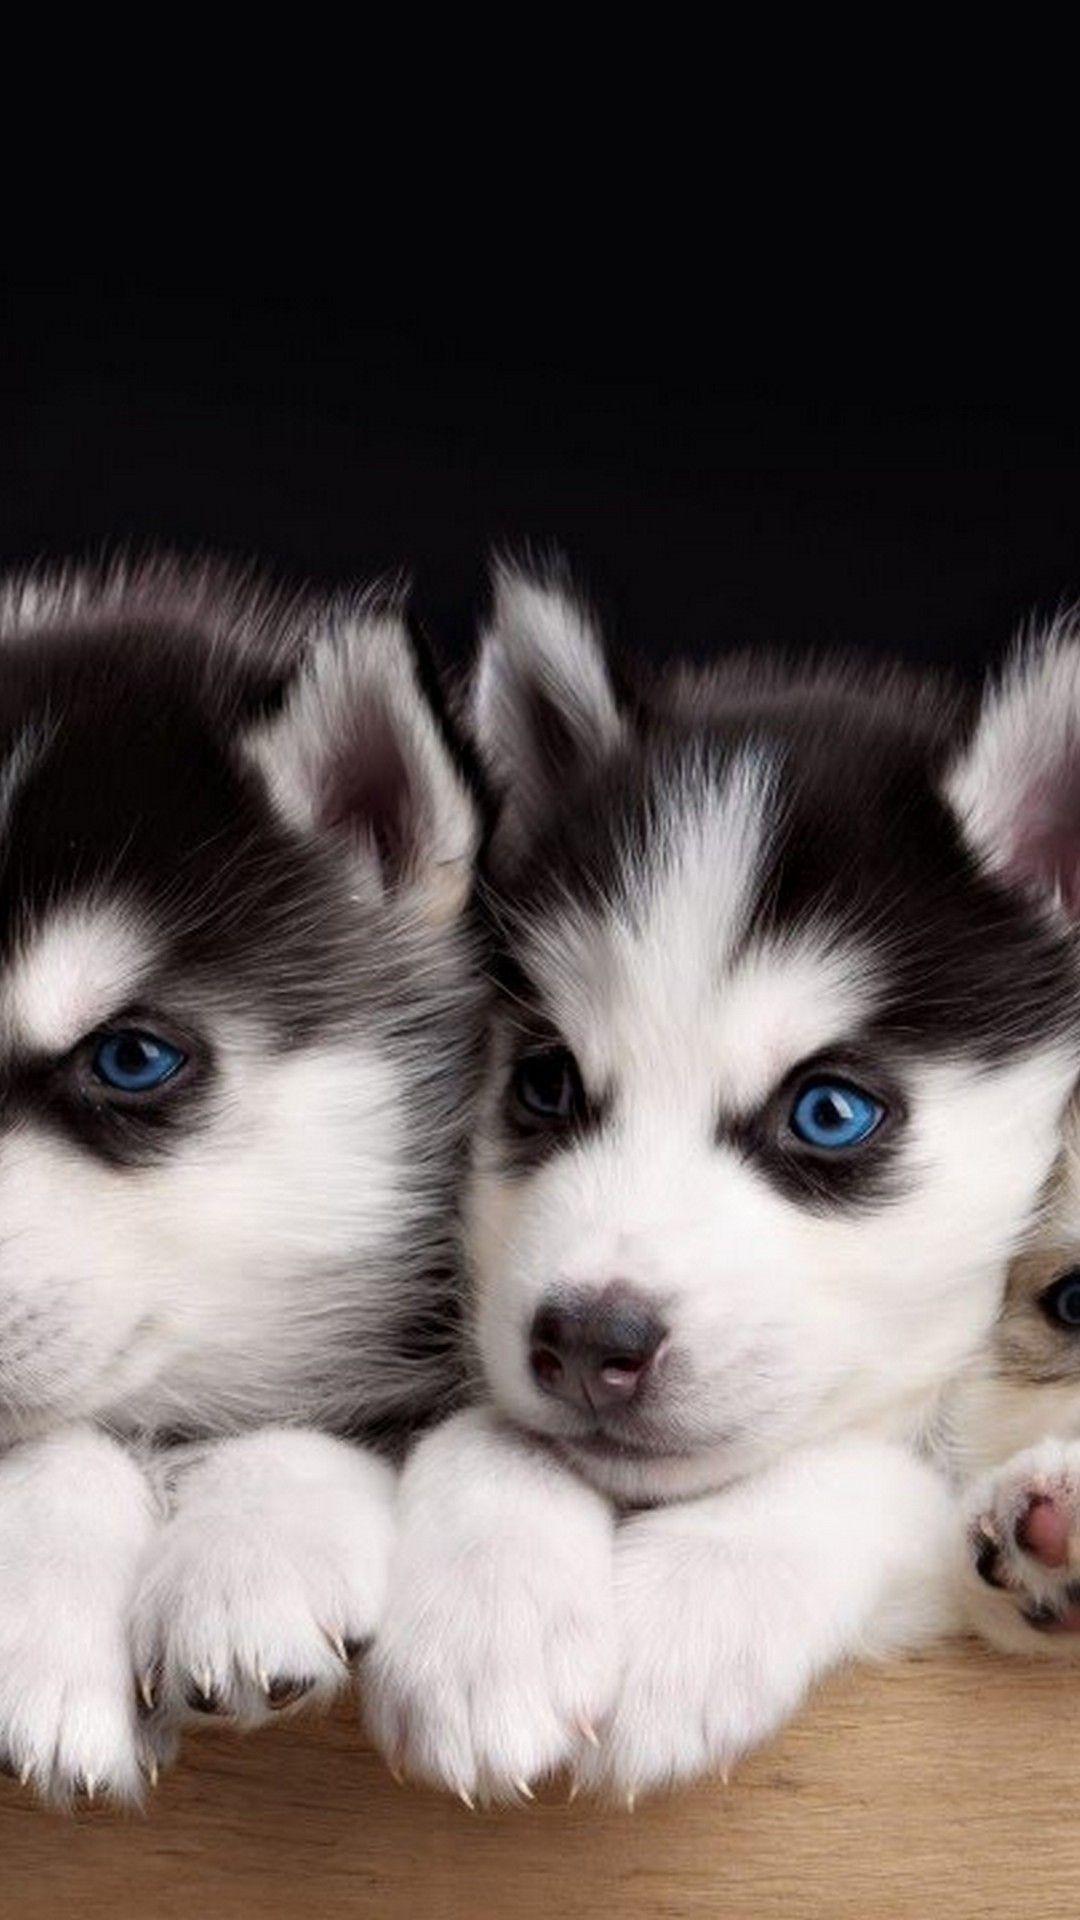 iPhone Wallpaper Cute Puppies. iPhoneWallpaper. Cute